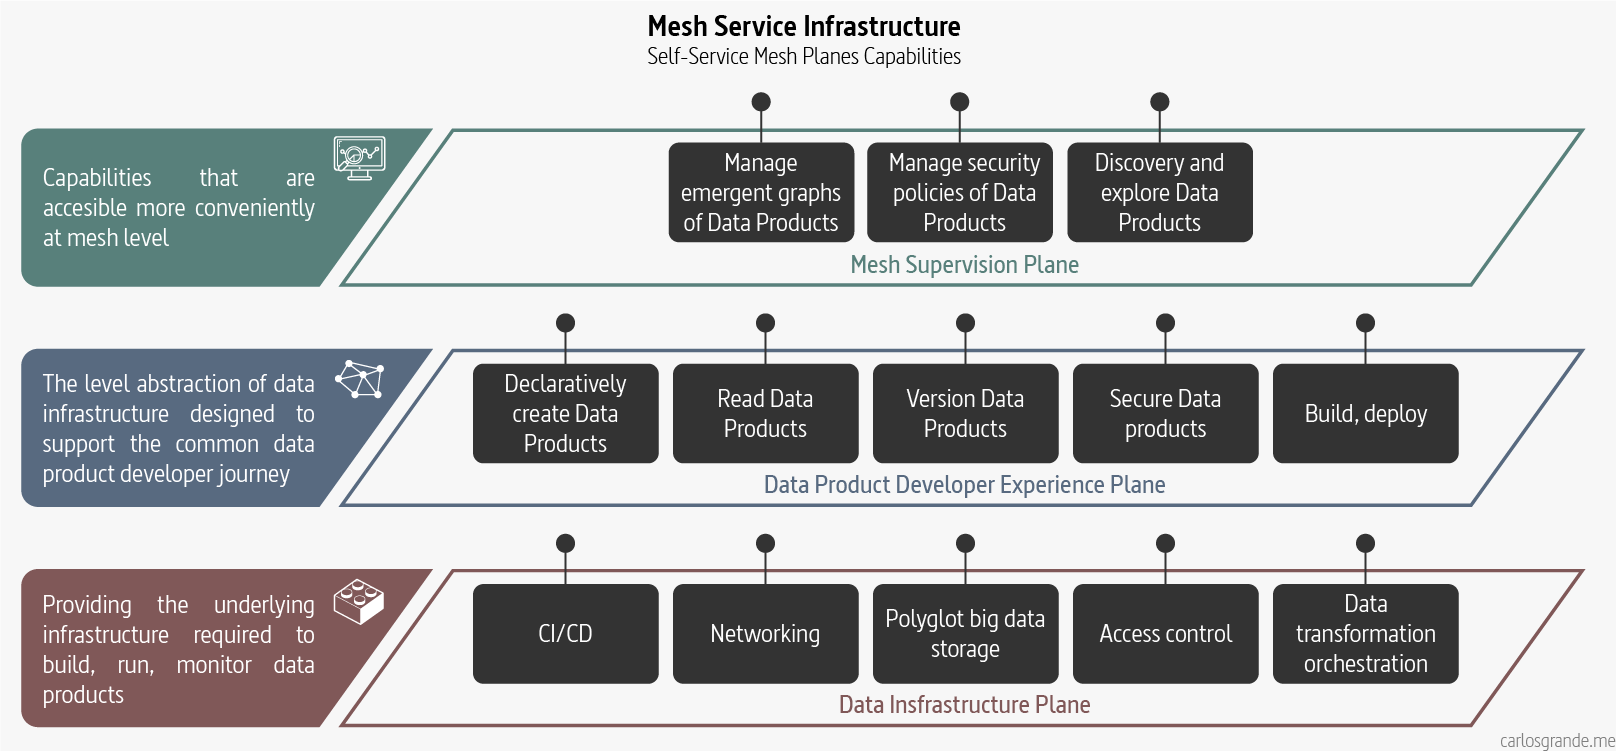 Mesh Service Infrastructure